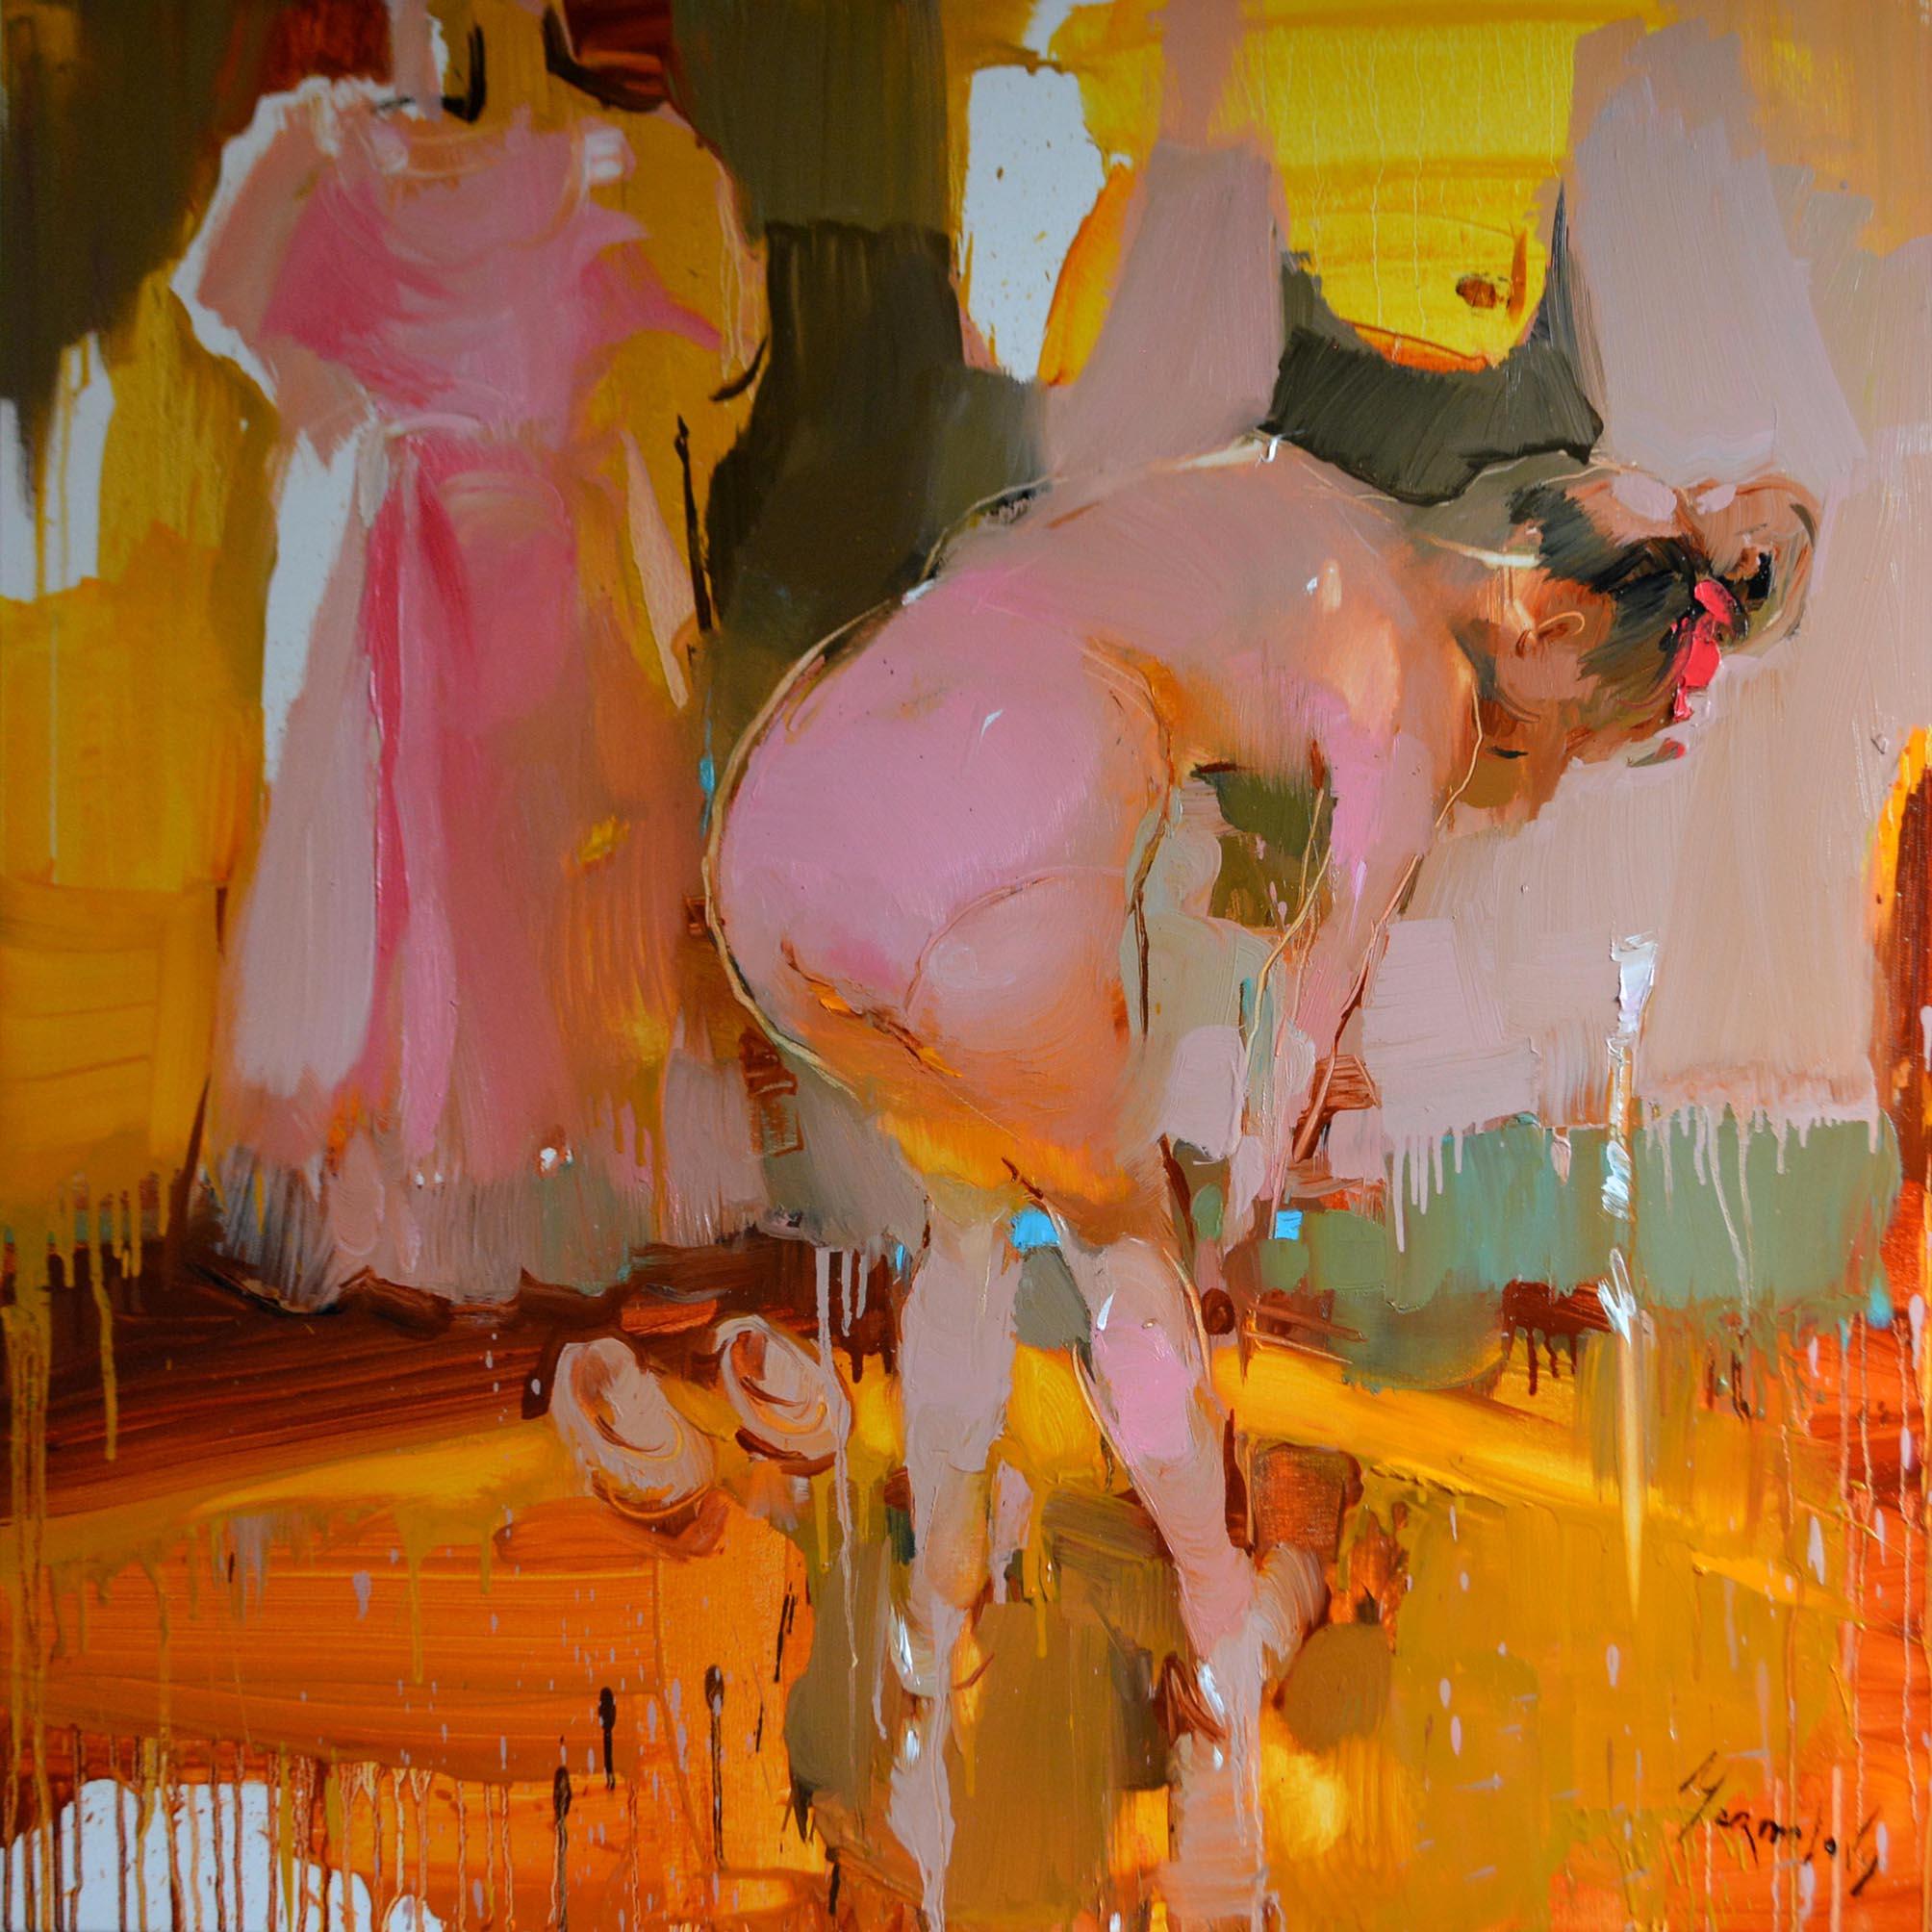 Little Ballerina-original abstract figurative oil painting-contemporary Art